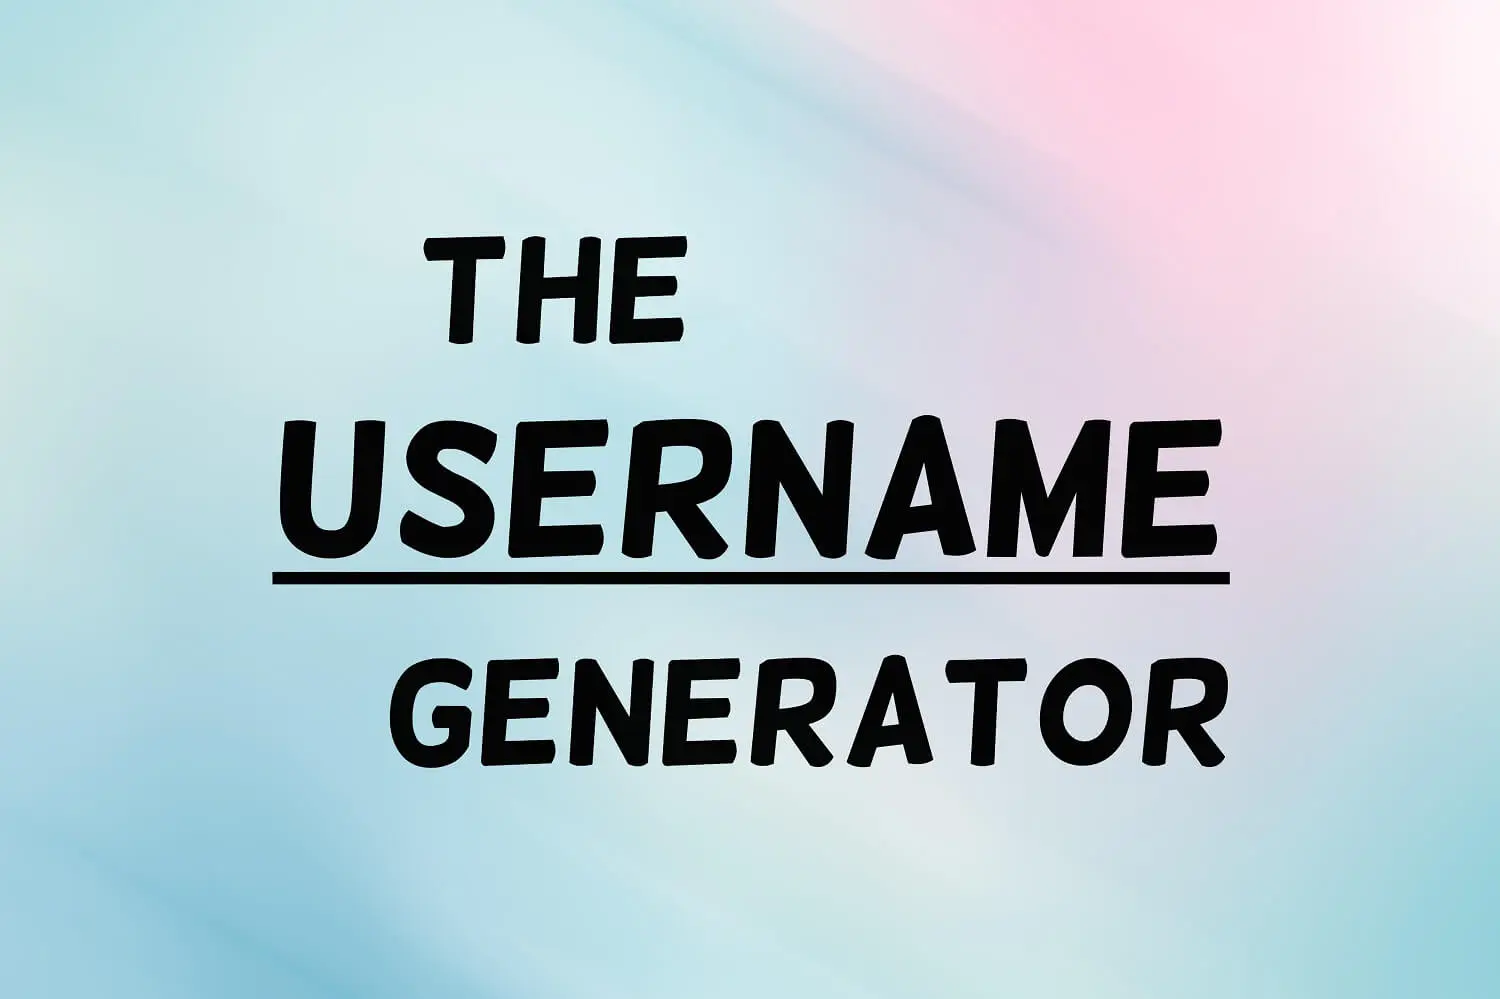 Introducing the top 10 random username generators